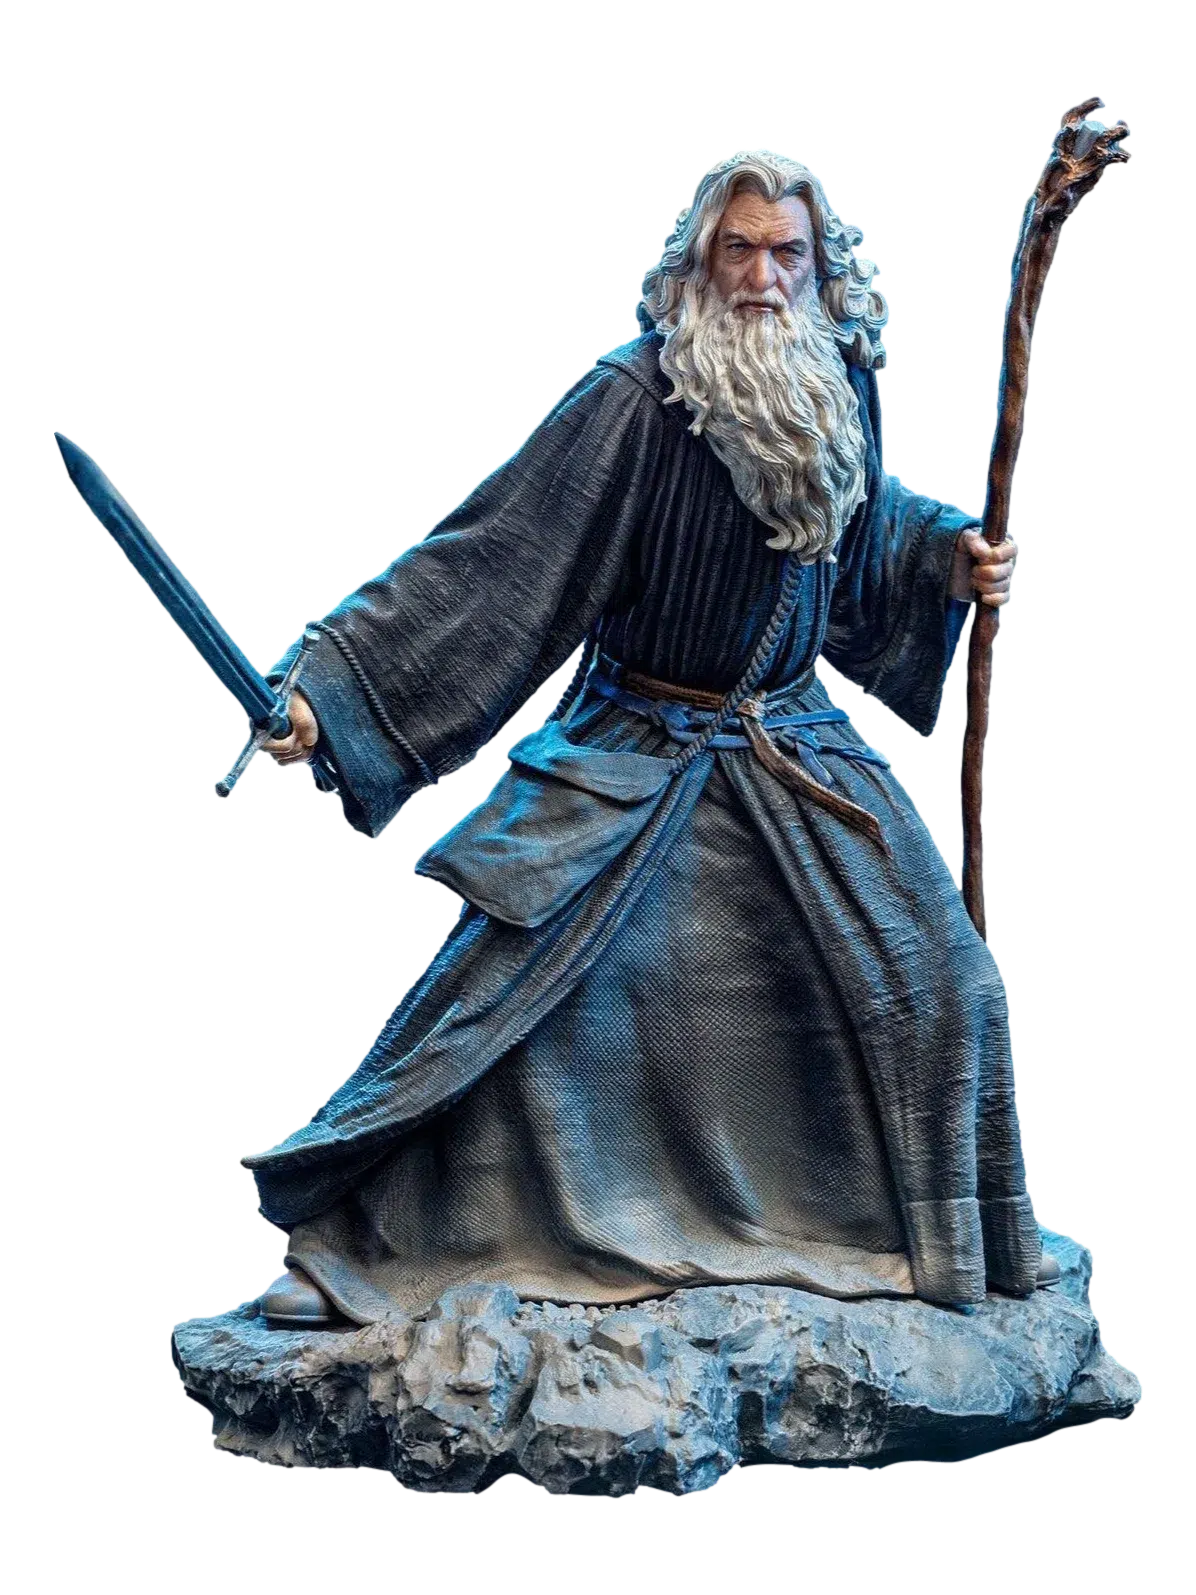 Gandalf: The Lord Of The Rings: Battle Diorama Series: Iron Studios: Iron Studios